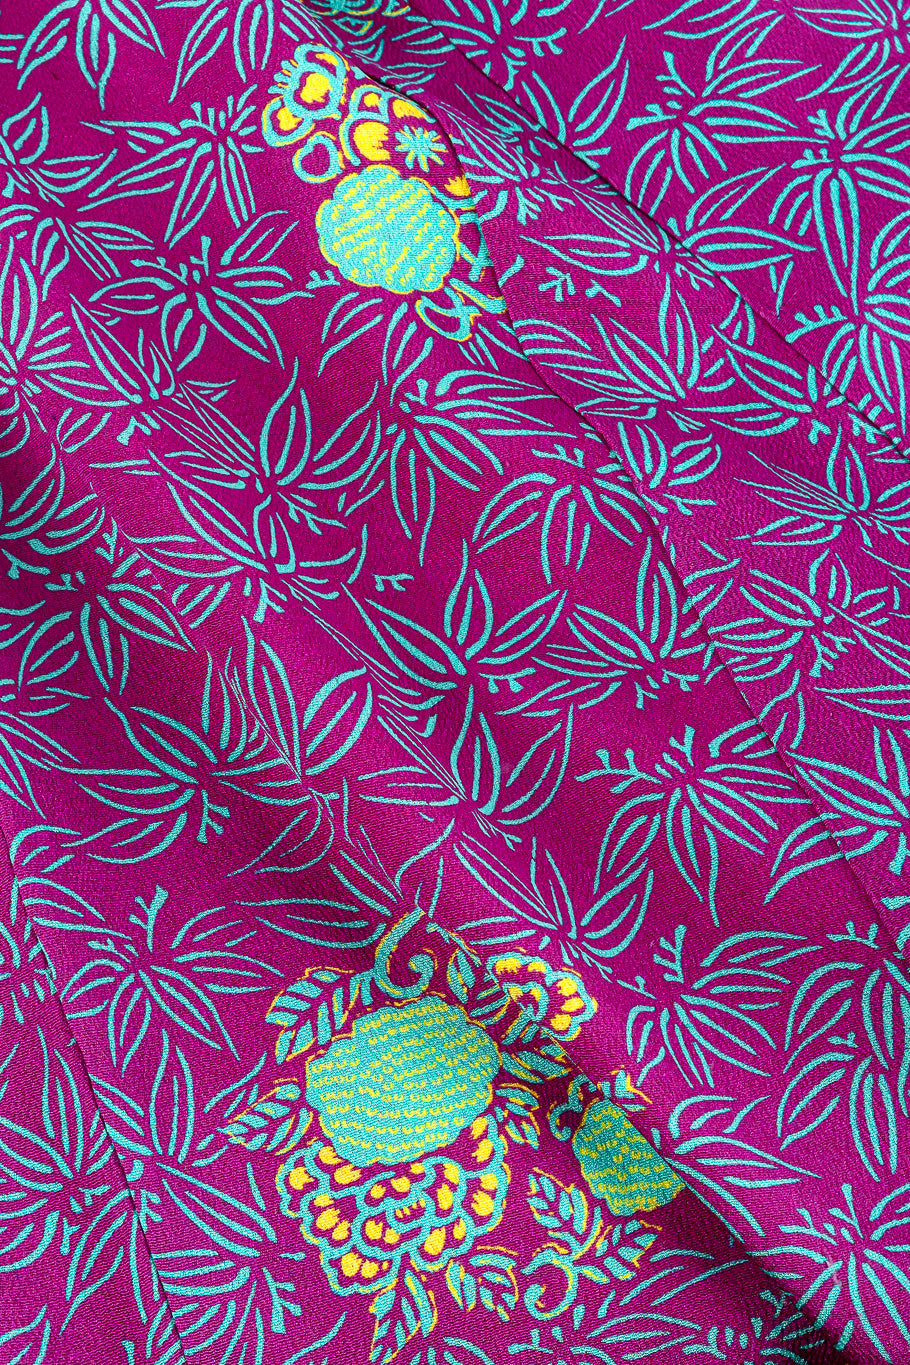 Floral leaf kimono fabric detail @recessla